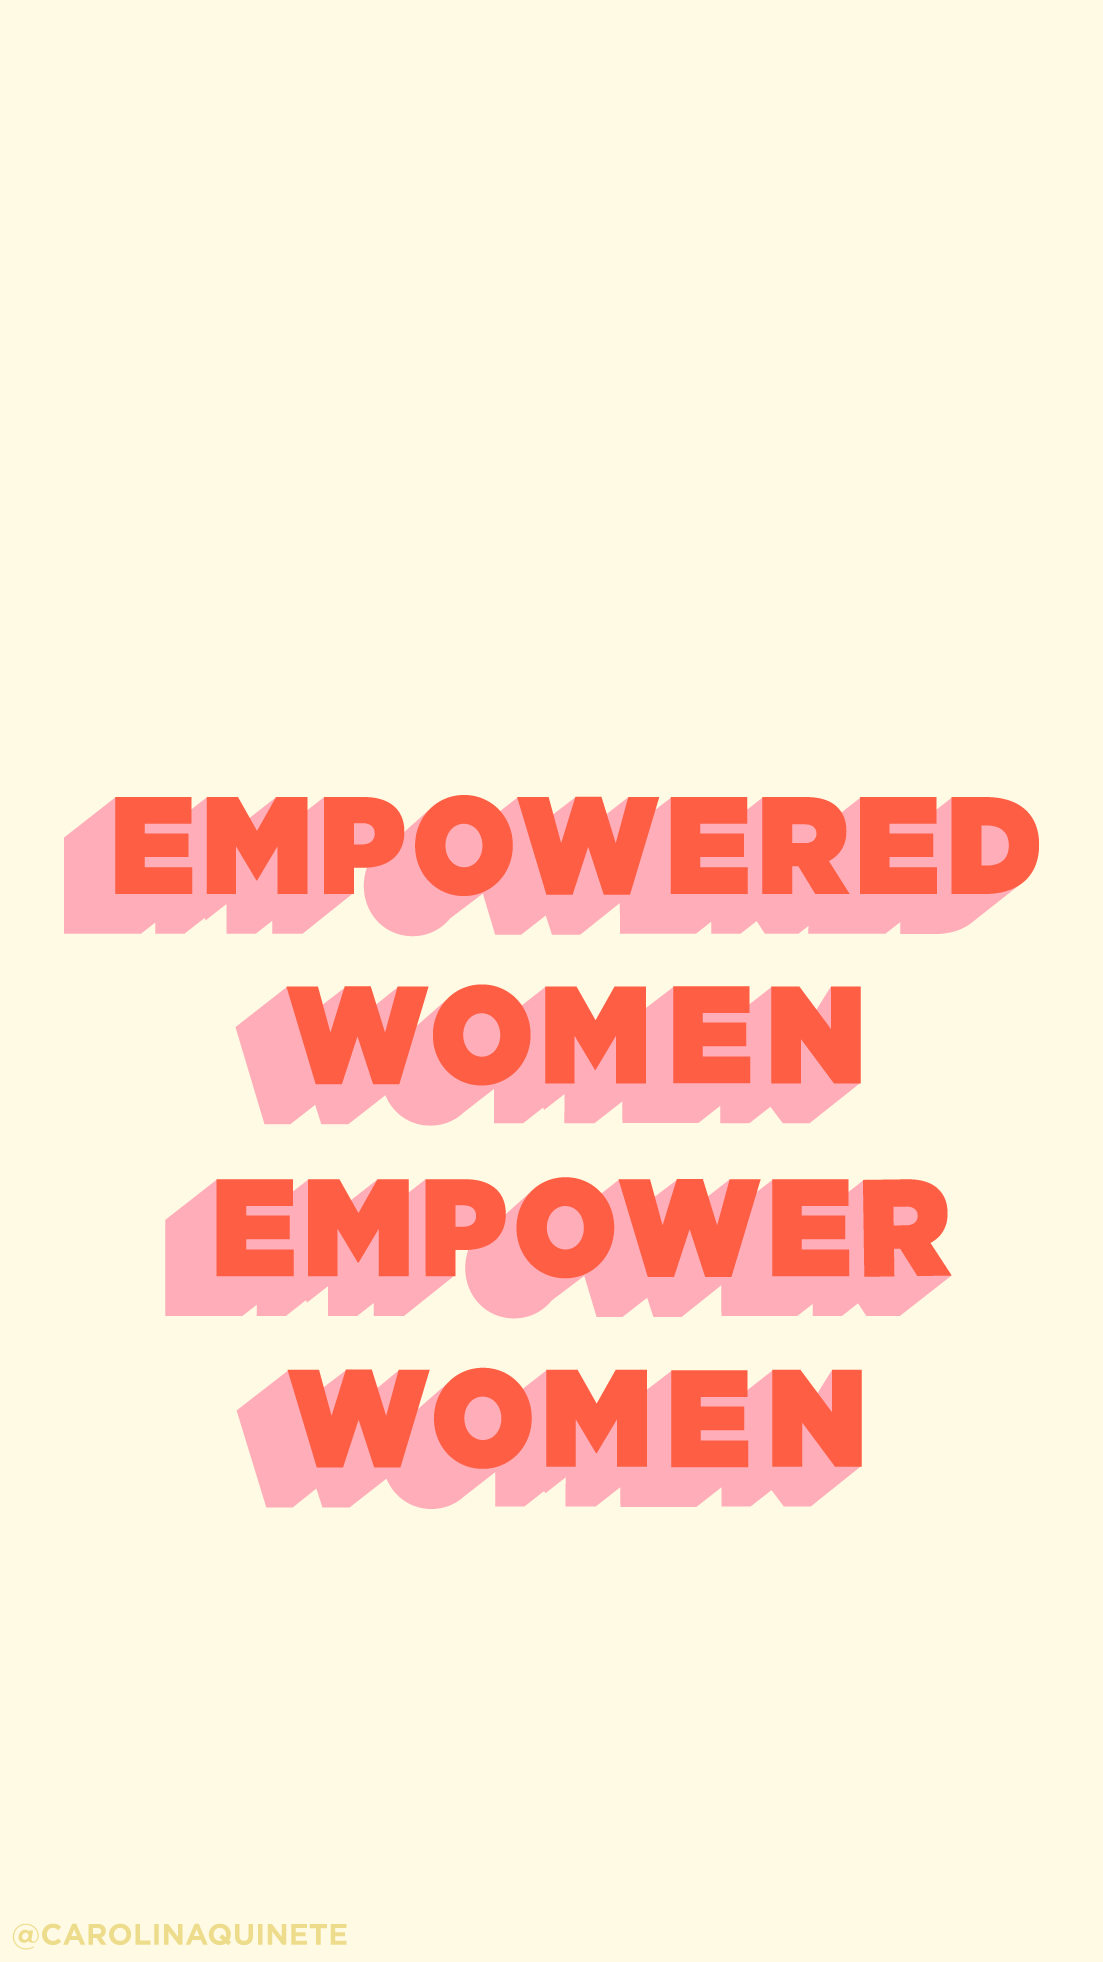 Empowerment Wallpaper Images  Free Download on Freepik